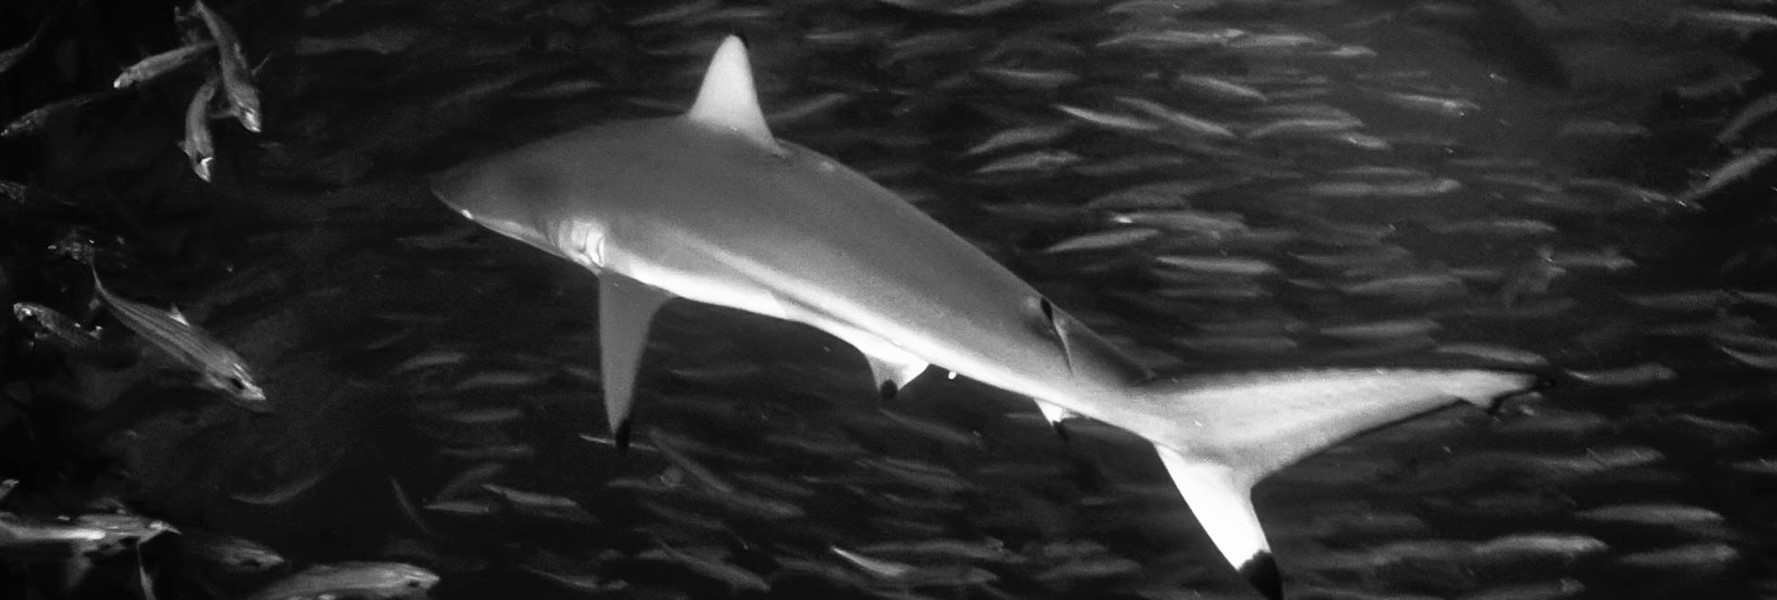 Die verschiedenen Hai-Arten des Roten Meeres.